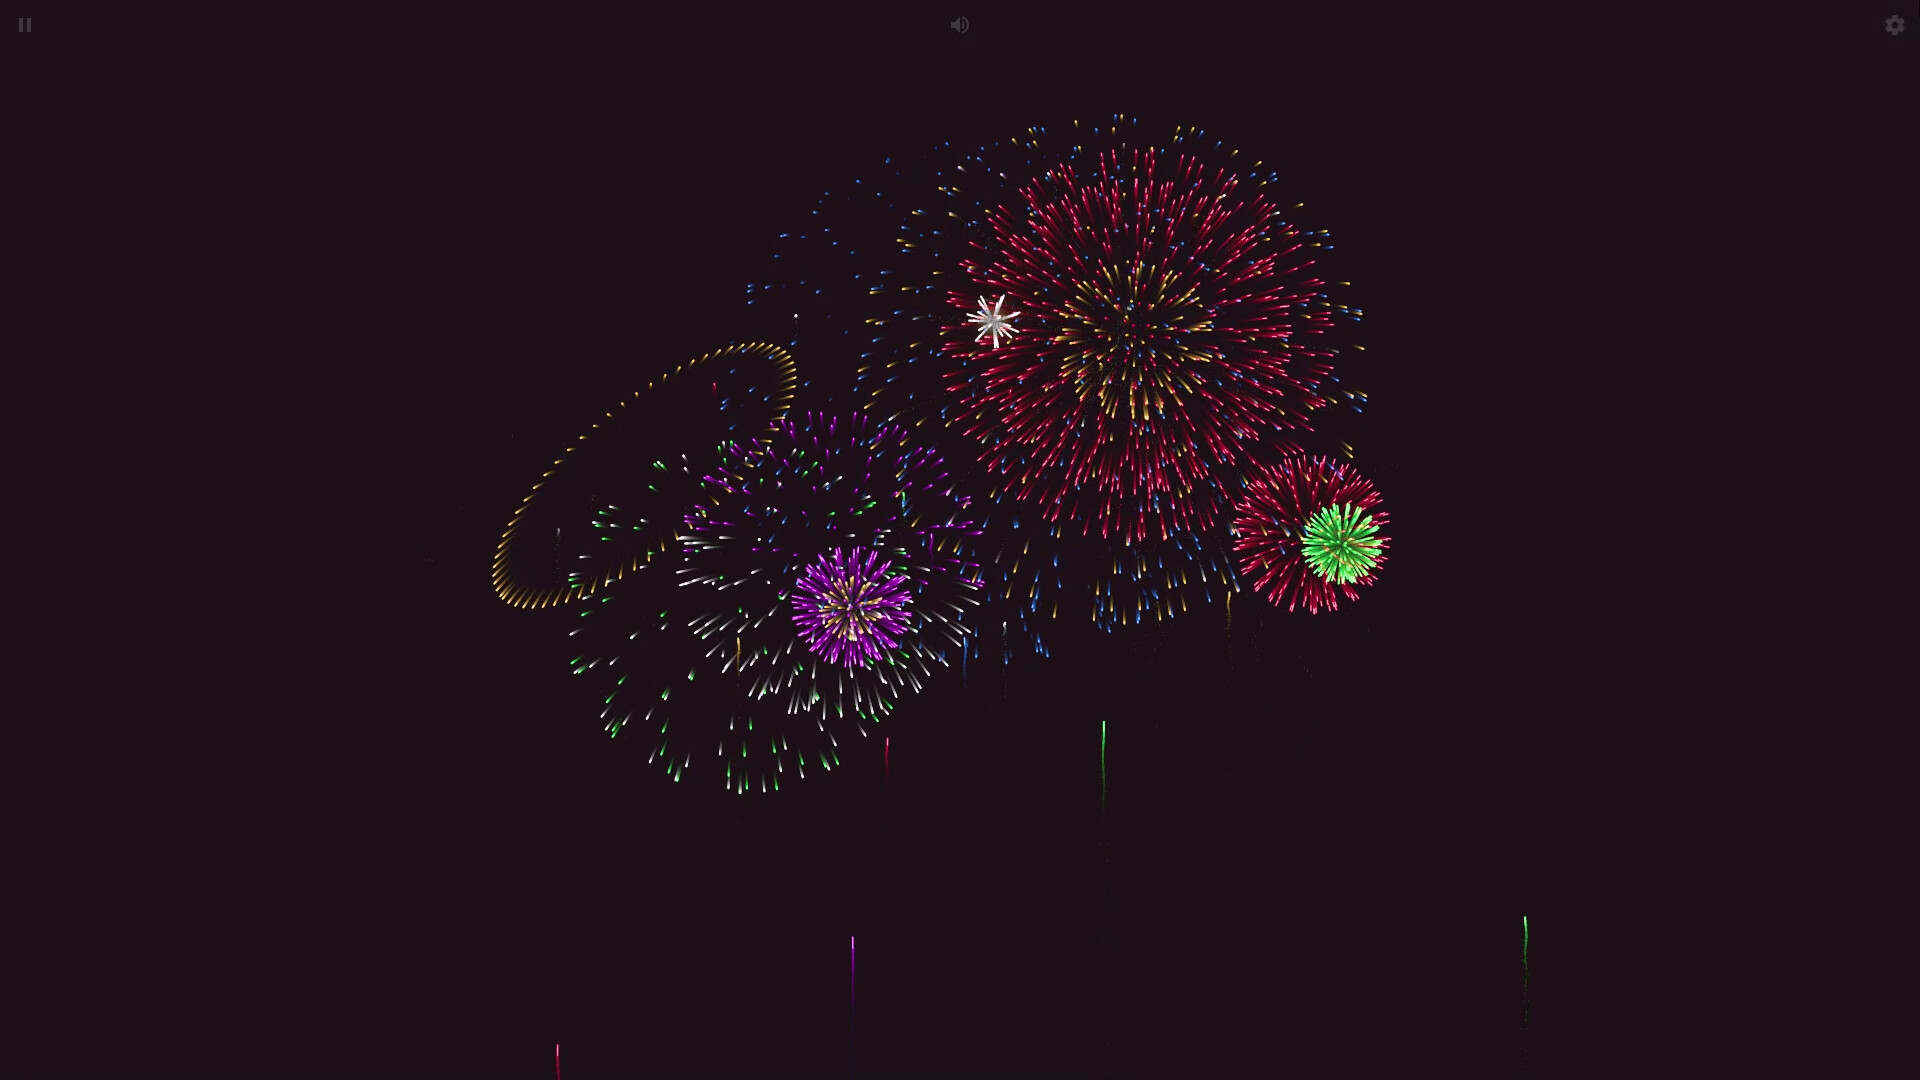 [$ 1.91] Endless Fireworks Simulator Steam CD Key